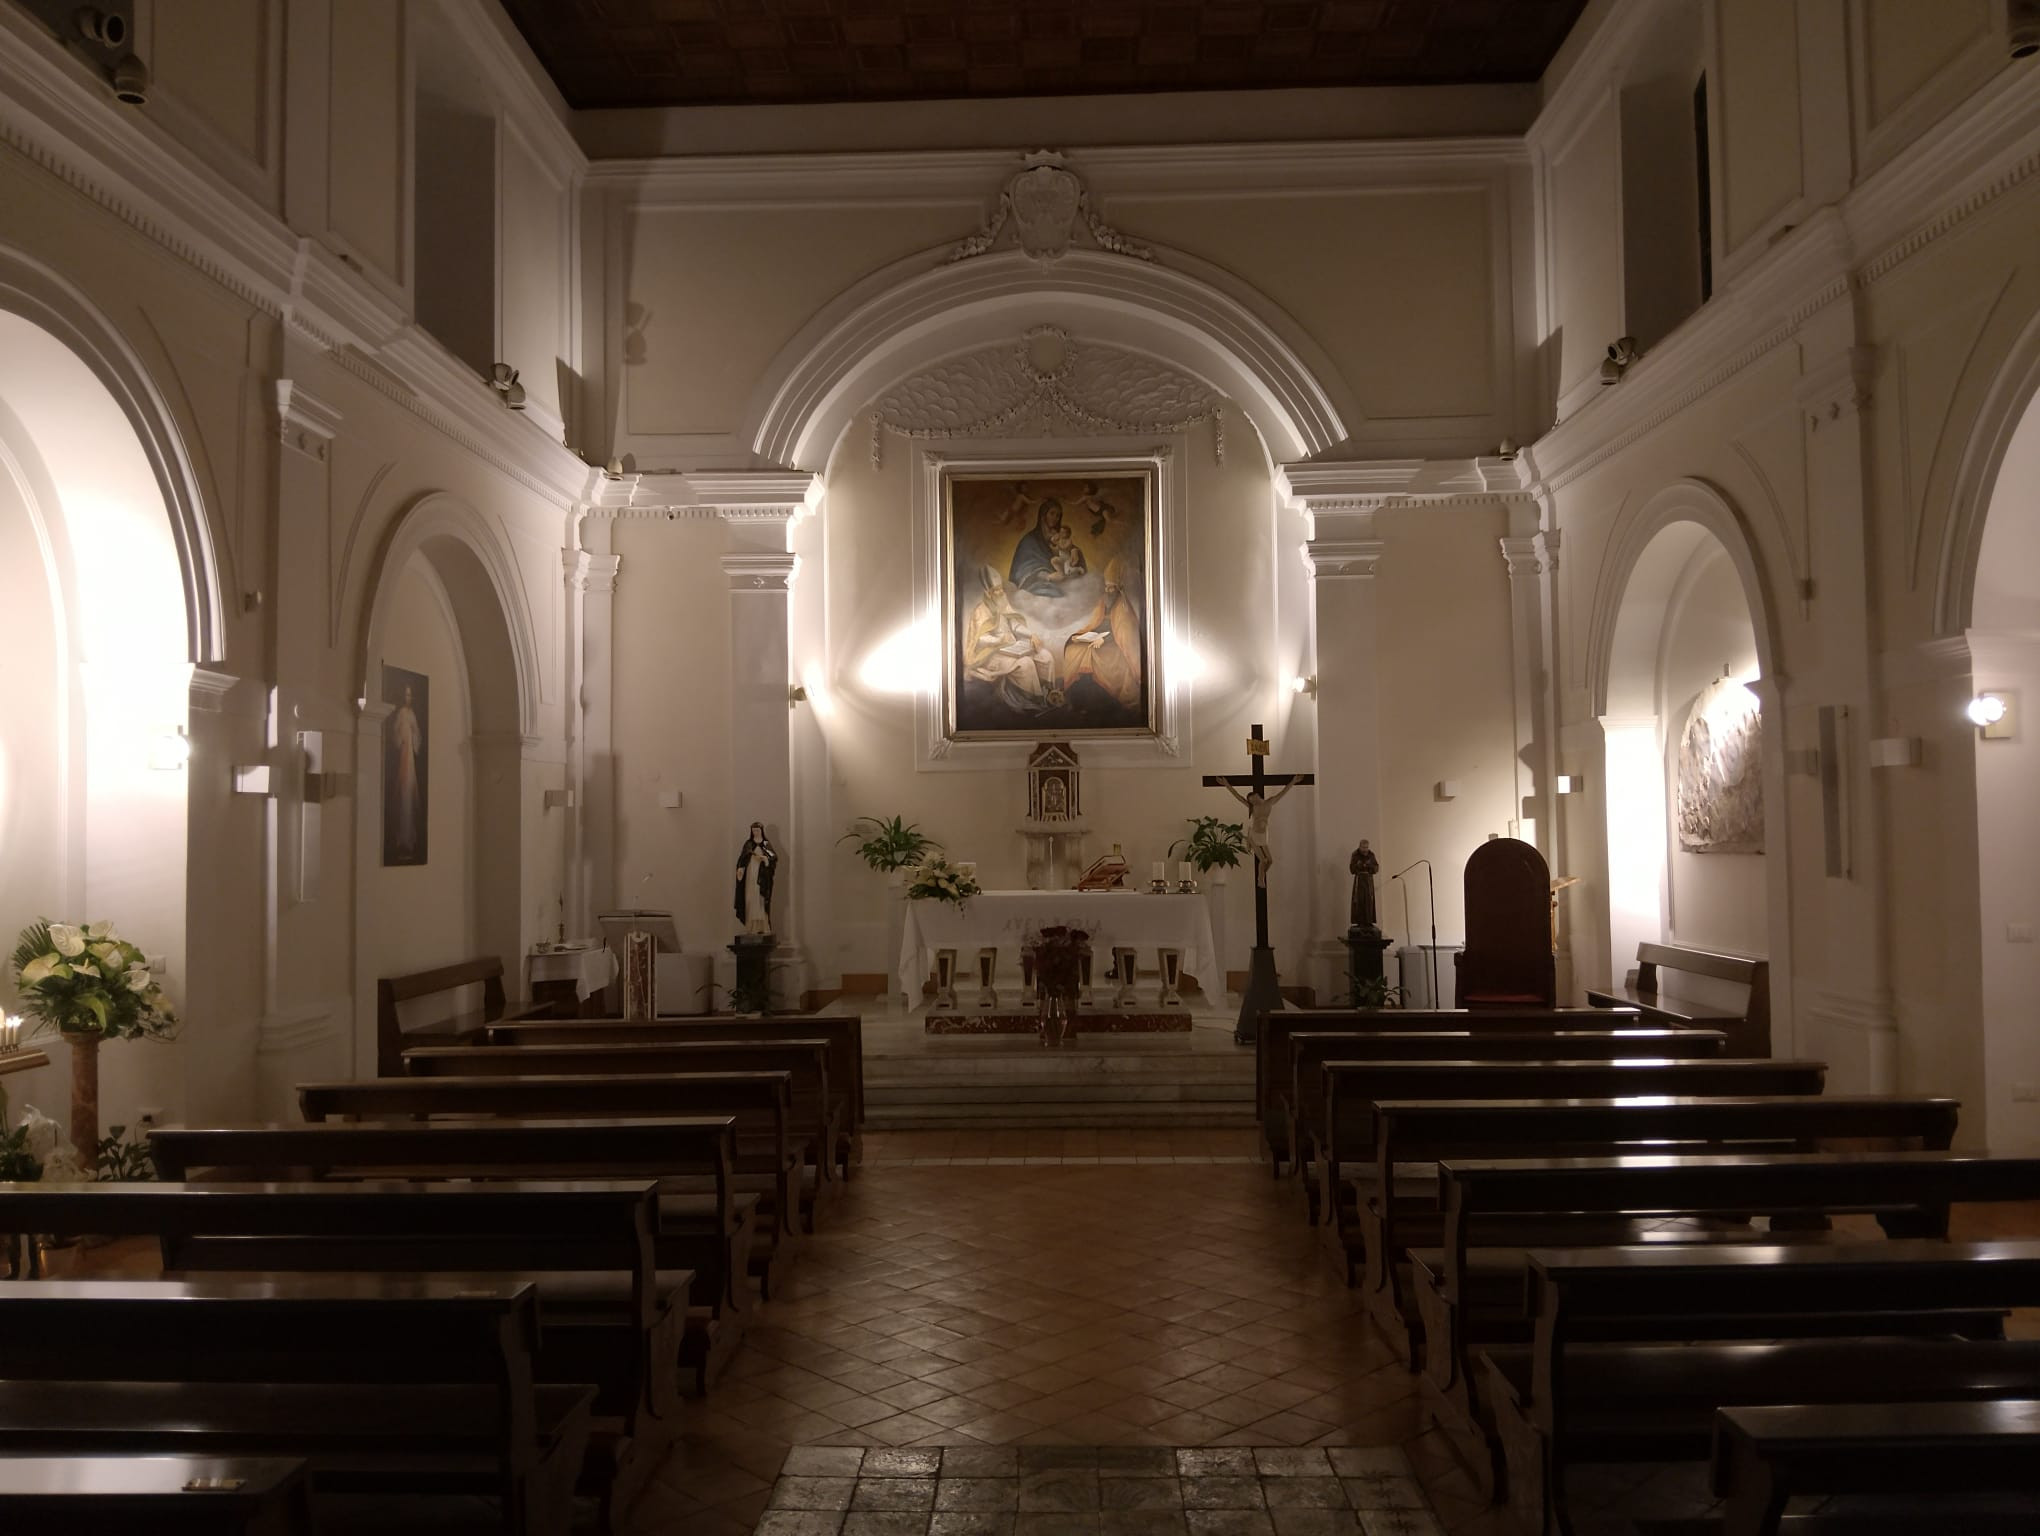 La lunga notte delle chiese arriva a Pontecitra 